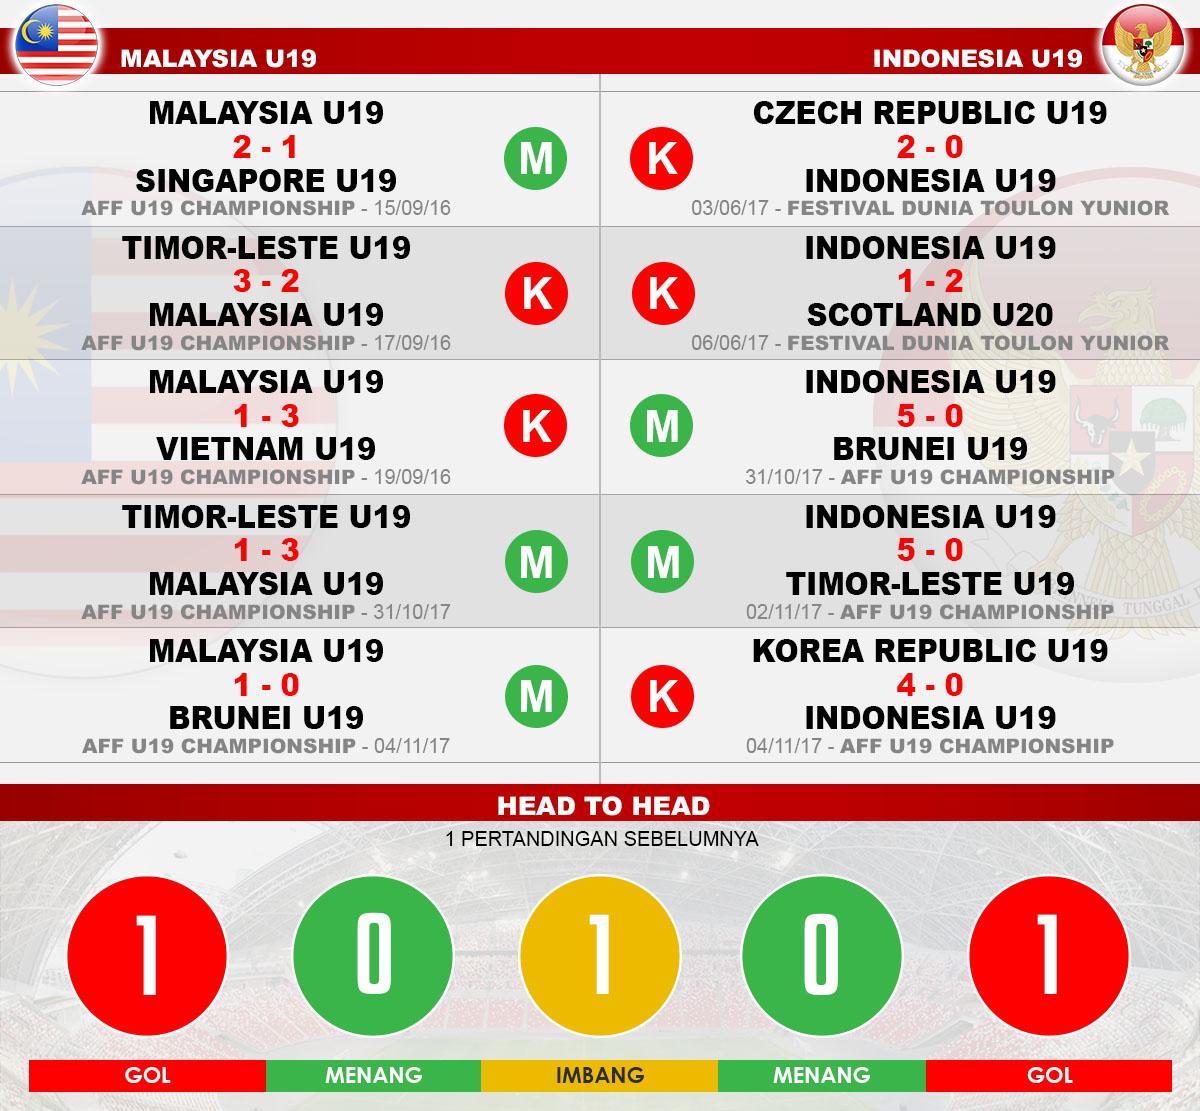 Malaysia U19 vs Indonesia U19 Copyright: Indosport.com